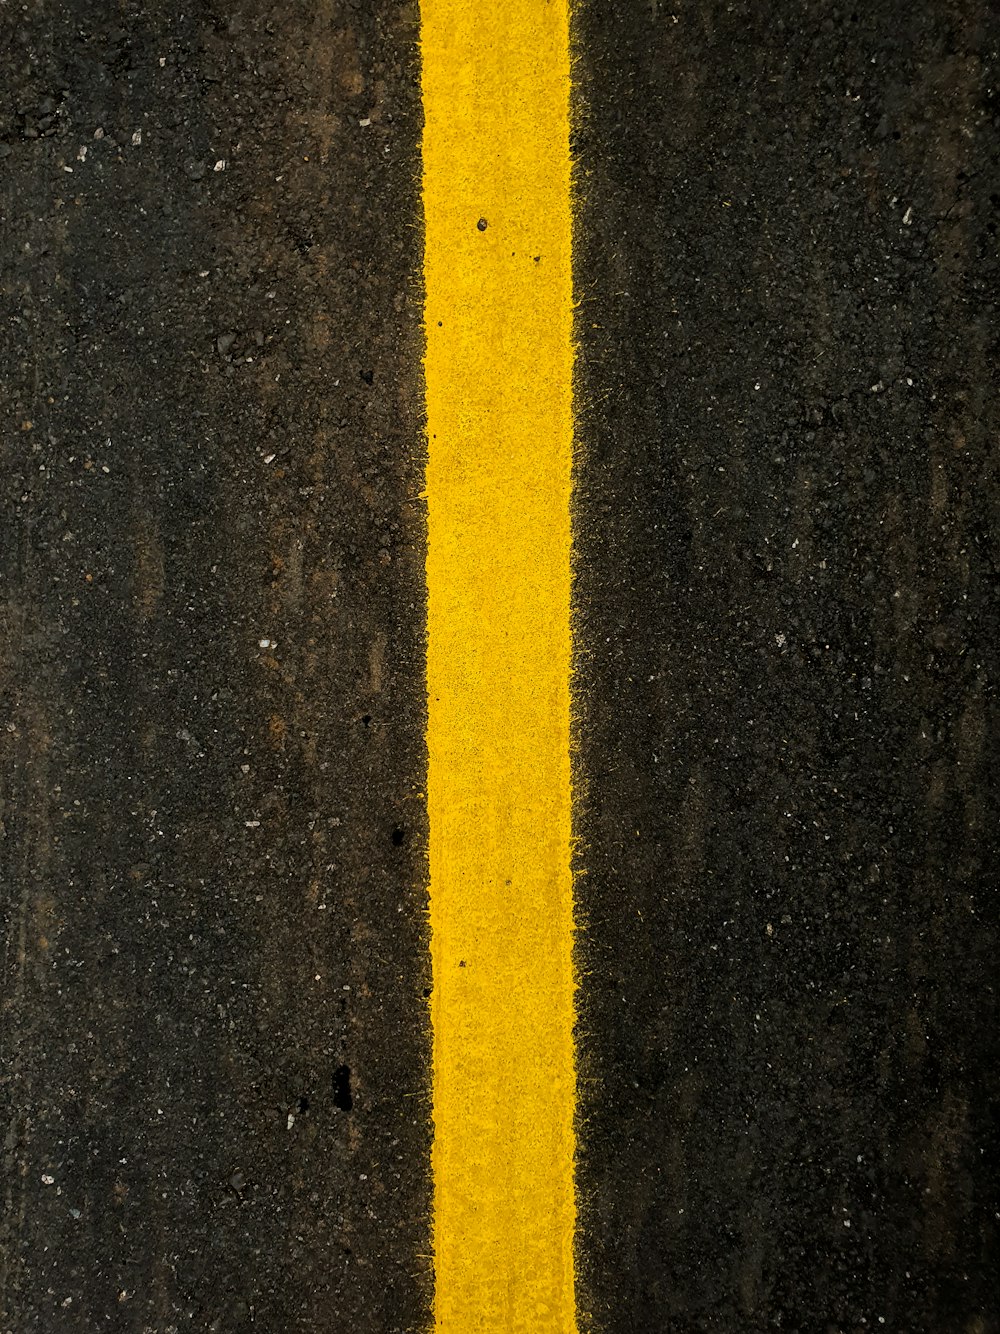 yellow line on black sand